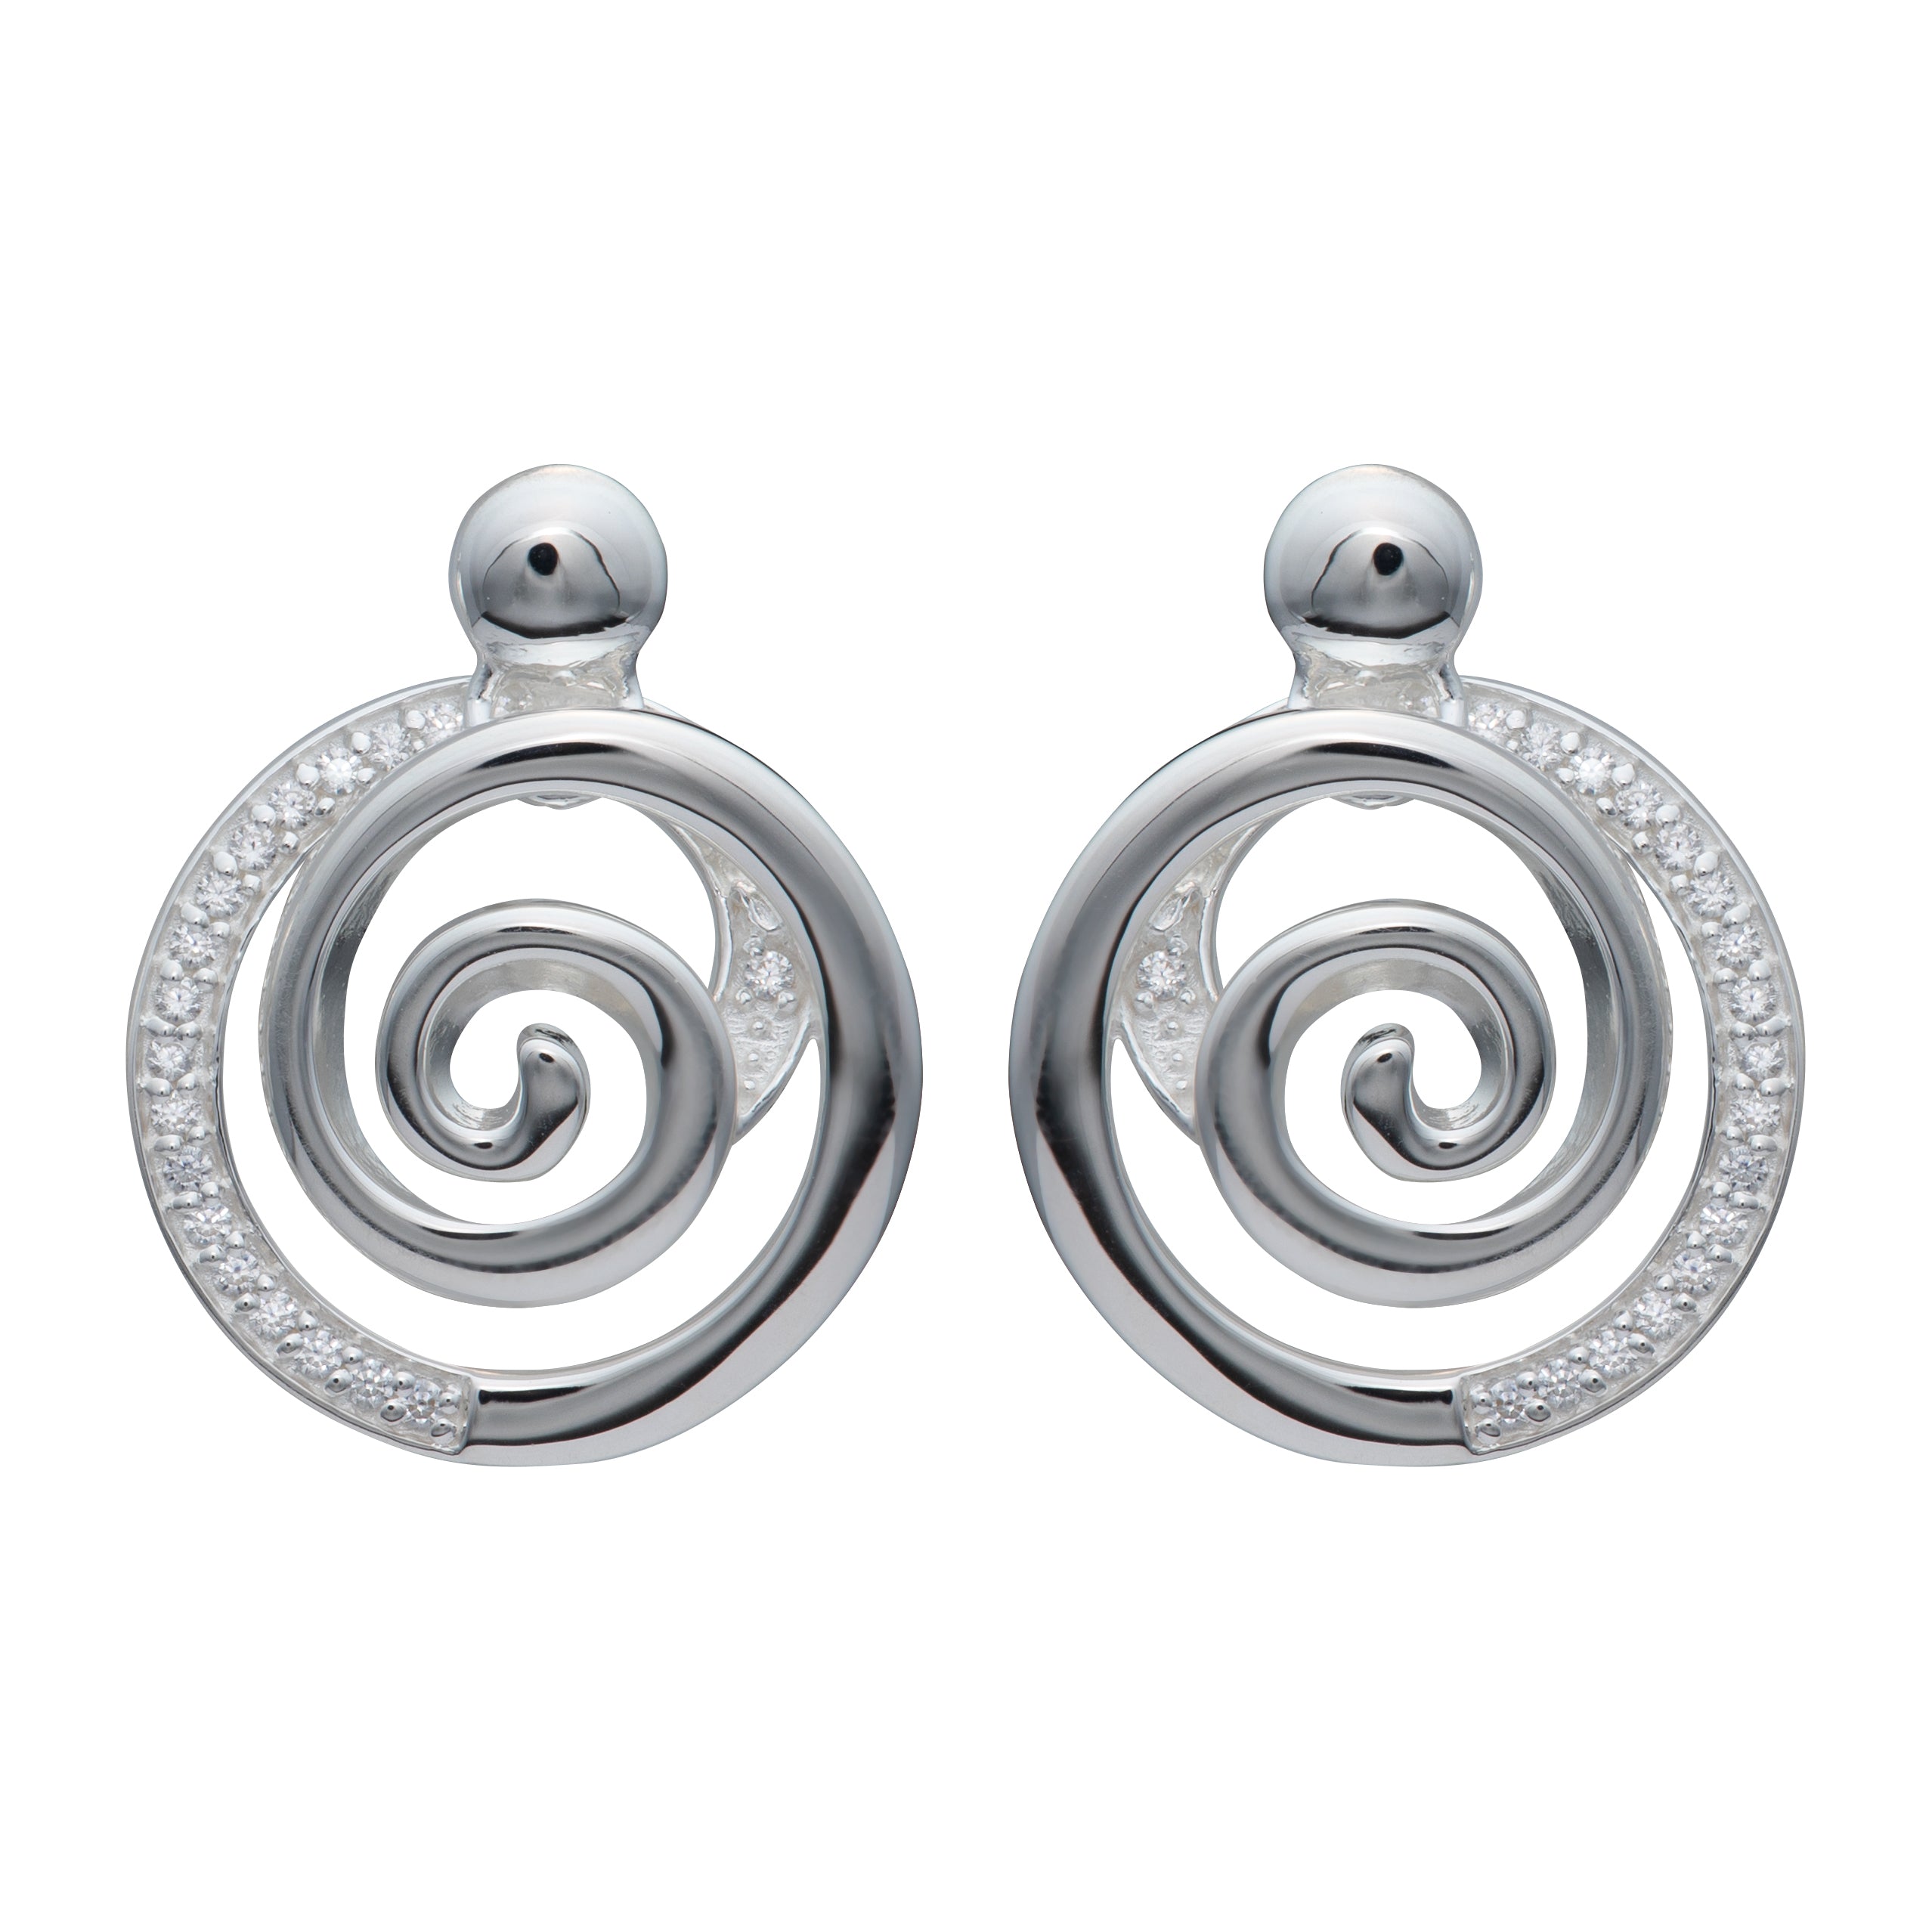 Unique & Co Silver Zirconia Circular Swirl Earrings